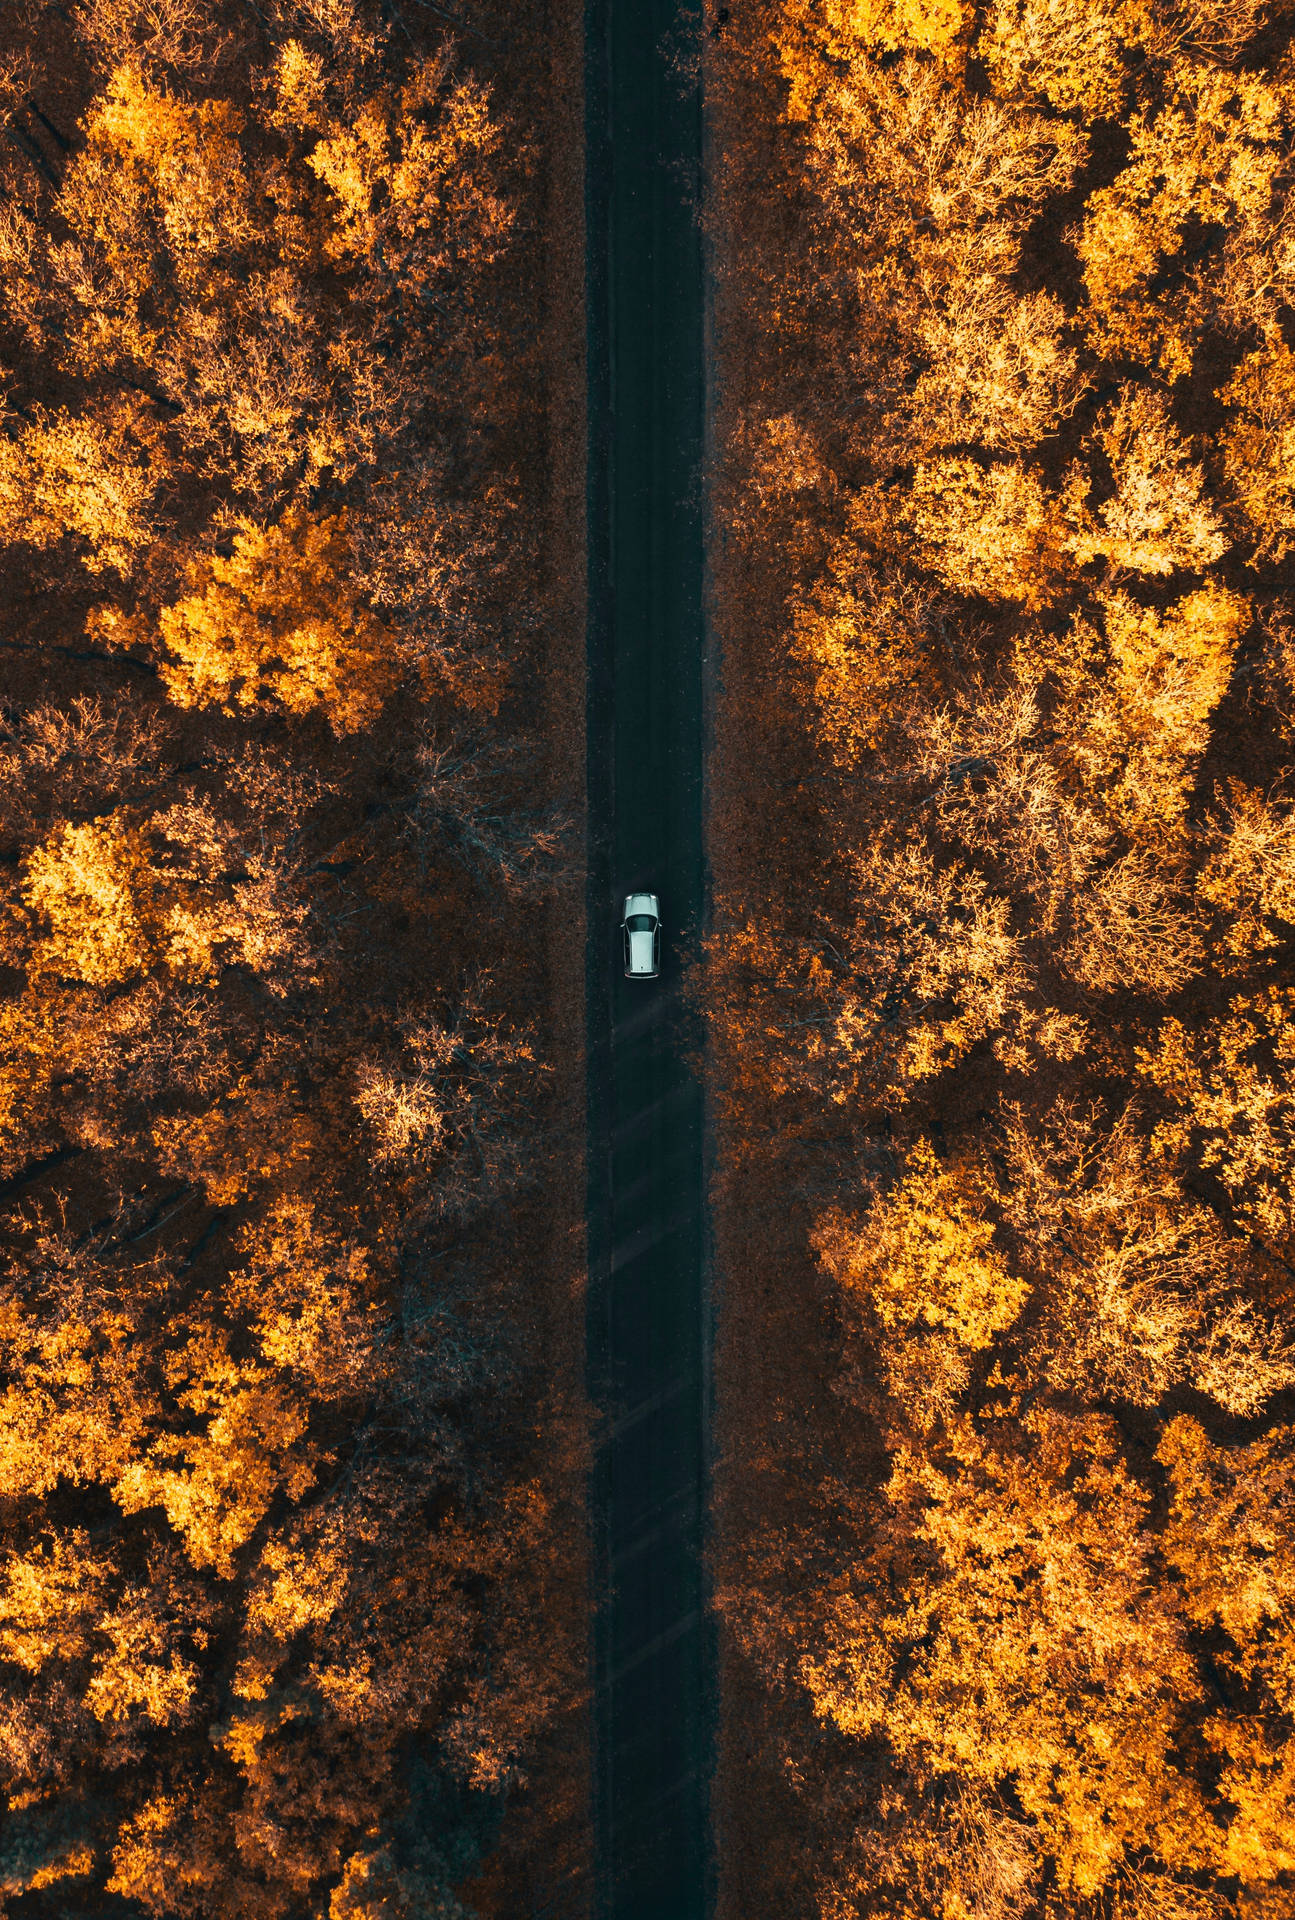 Hd Car In Autumn Forest Wallpaper